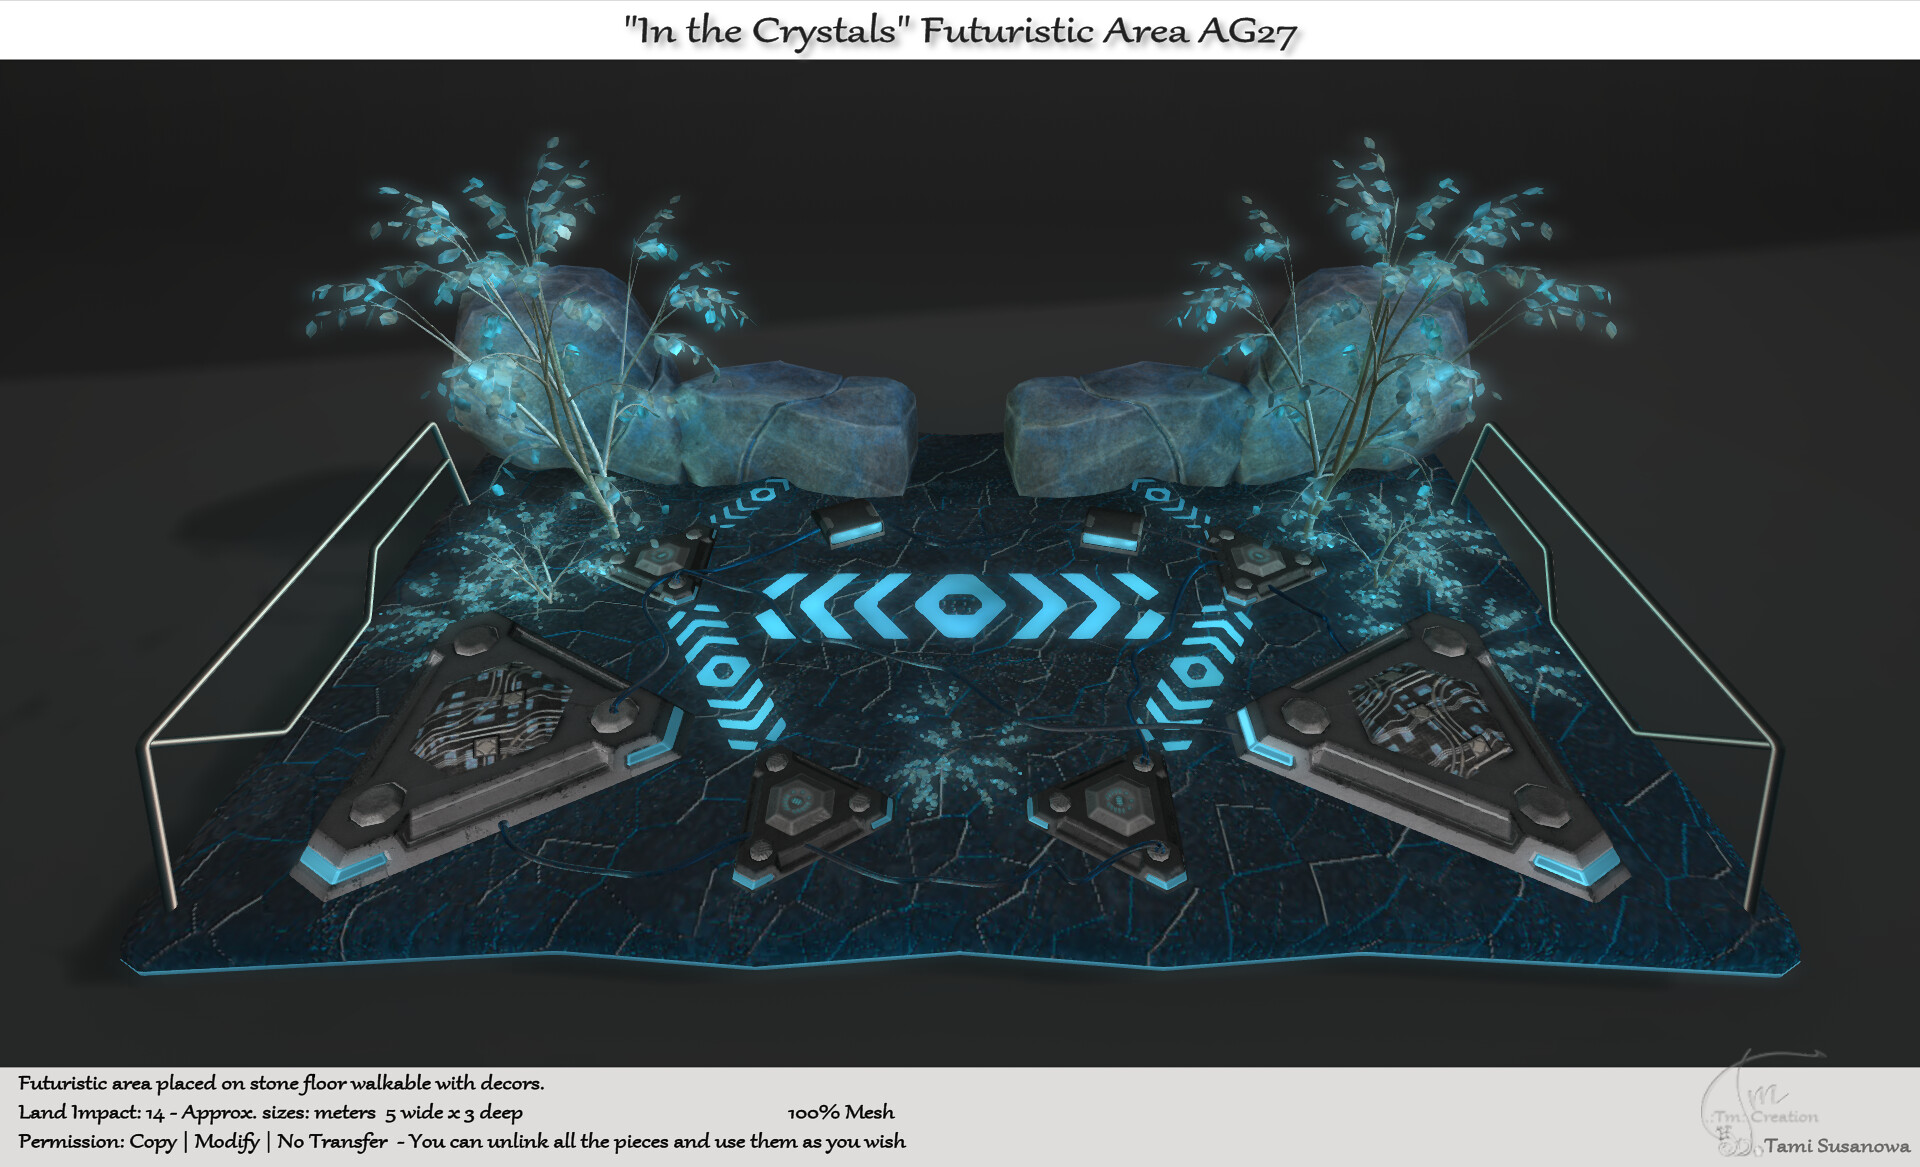 Tm Creation – “In the Crystals” Futuristic Area